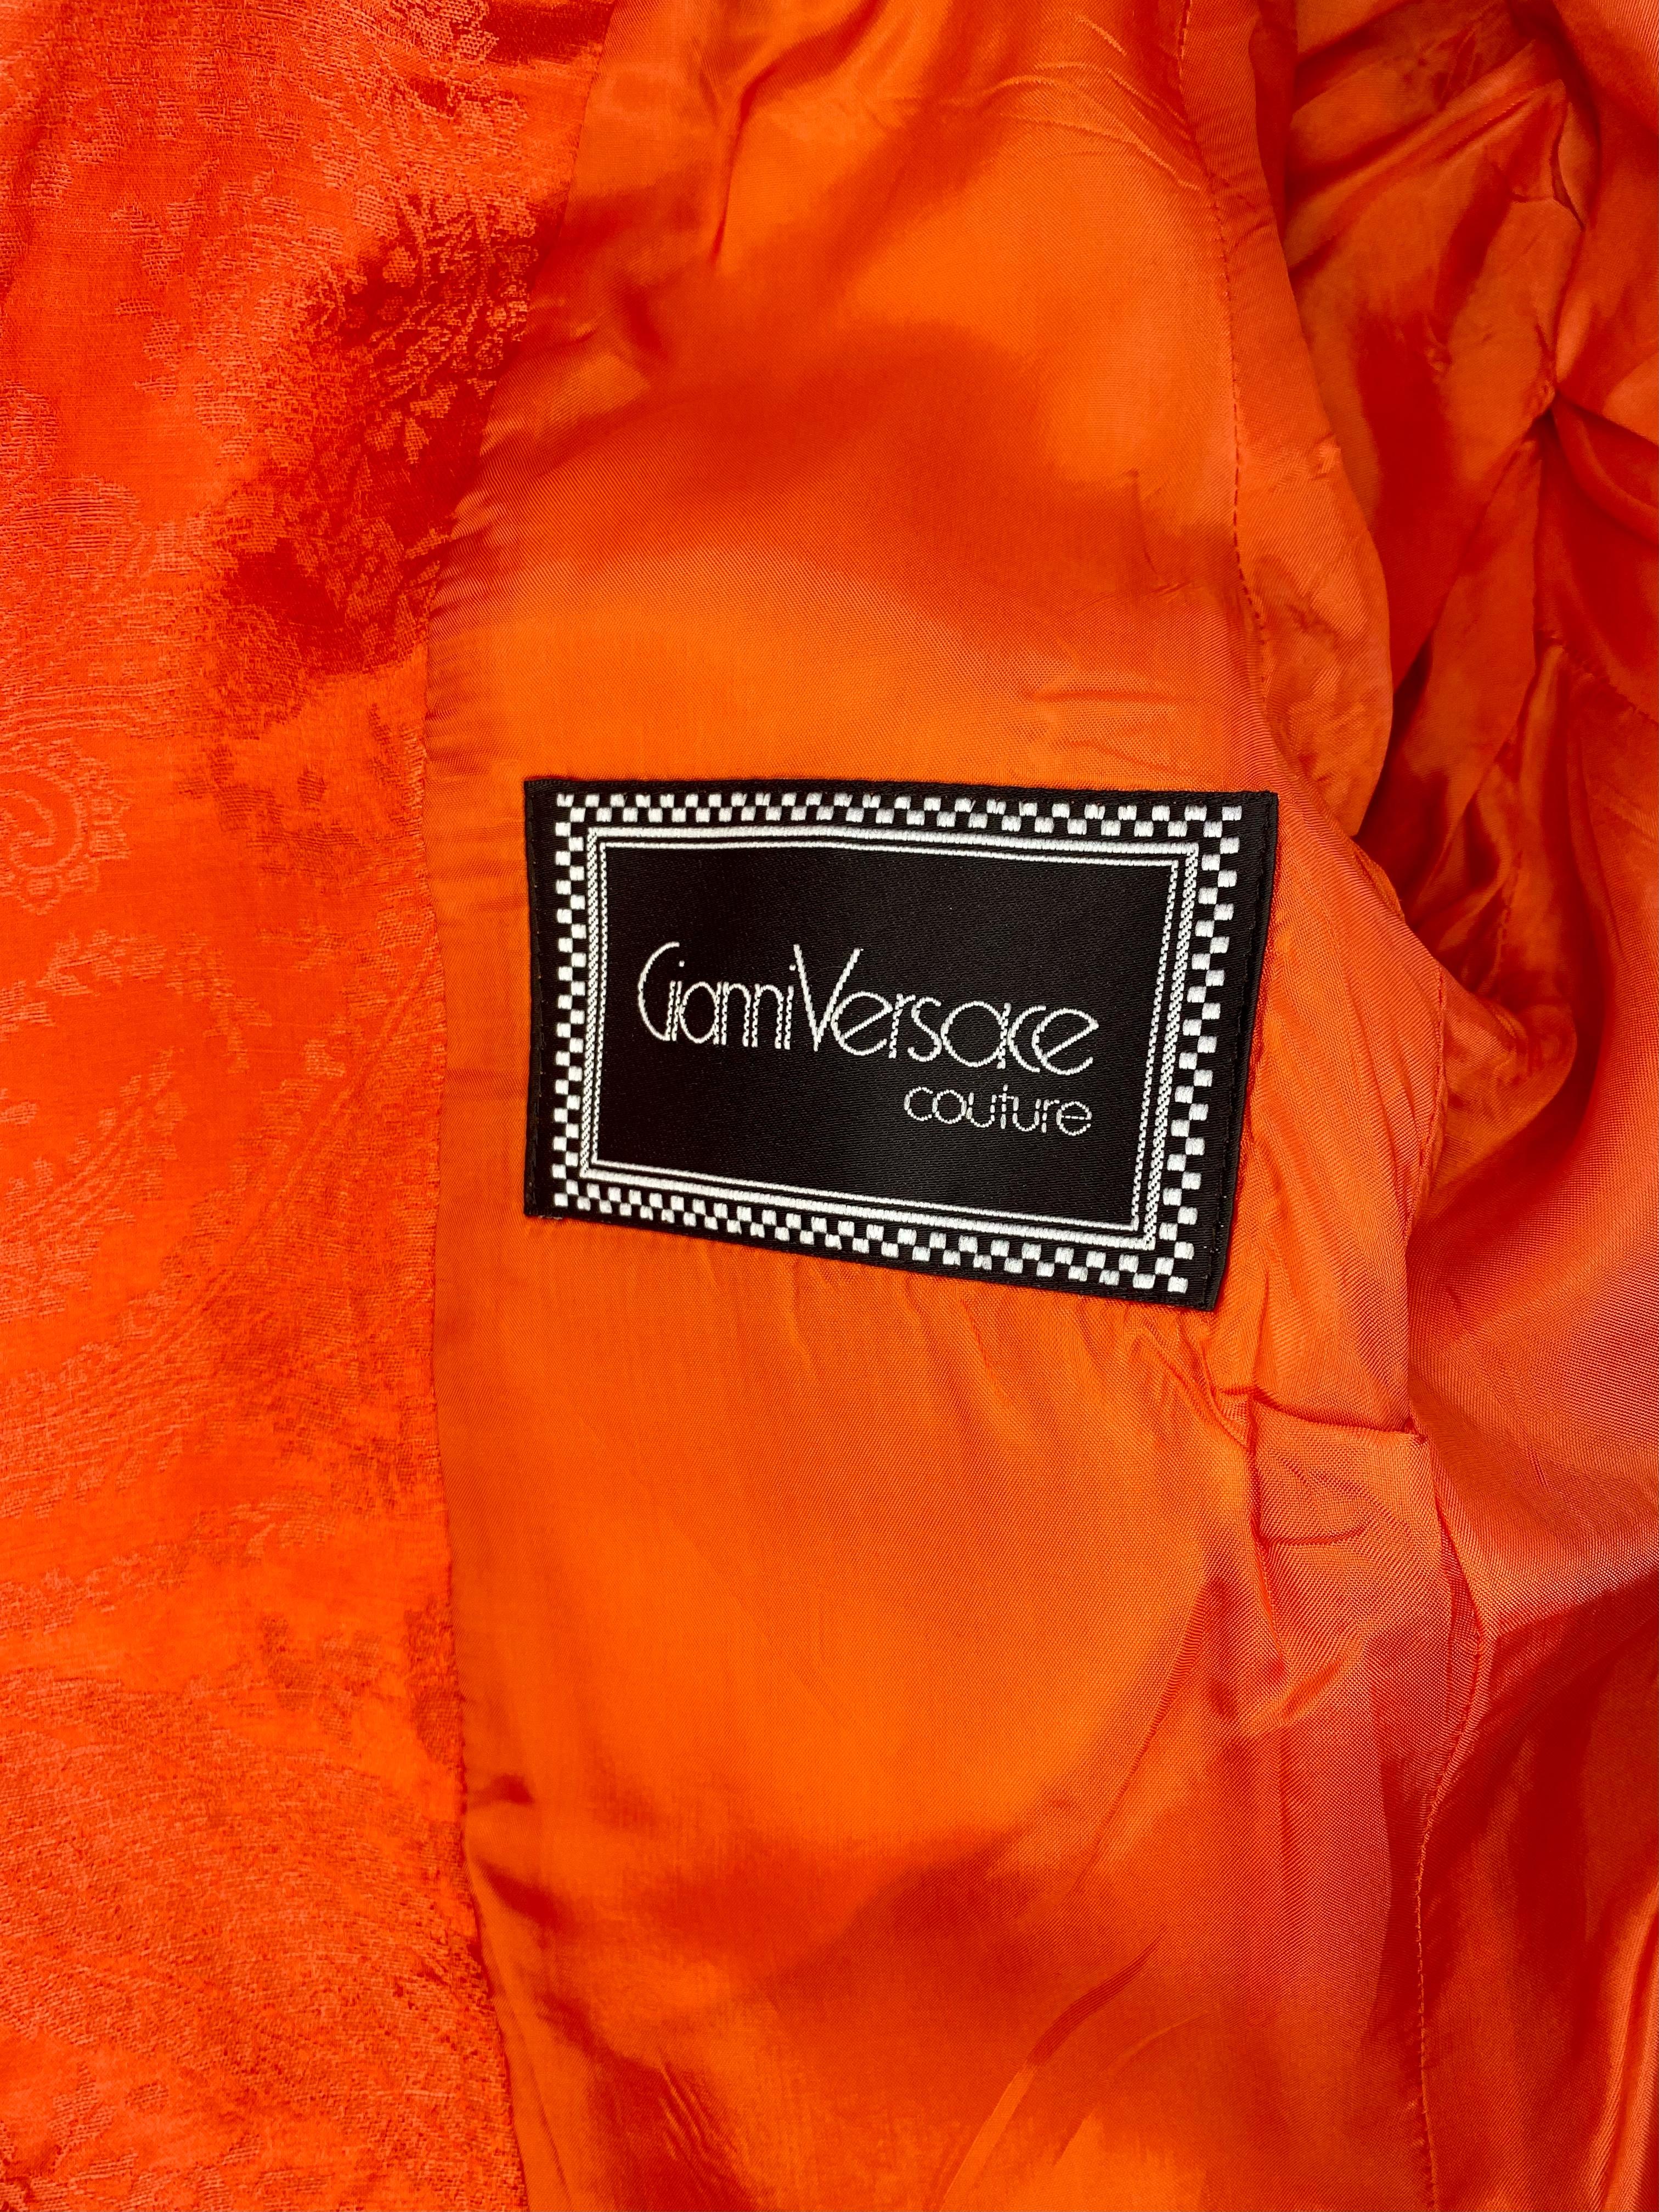 S/S 1991 Gianni Versace Couture Runway Orange Silk Paisley Print Blazer 2